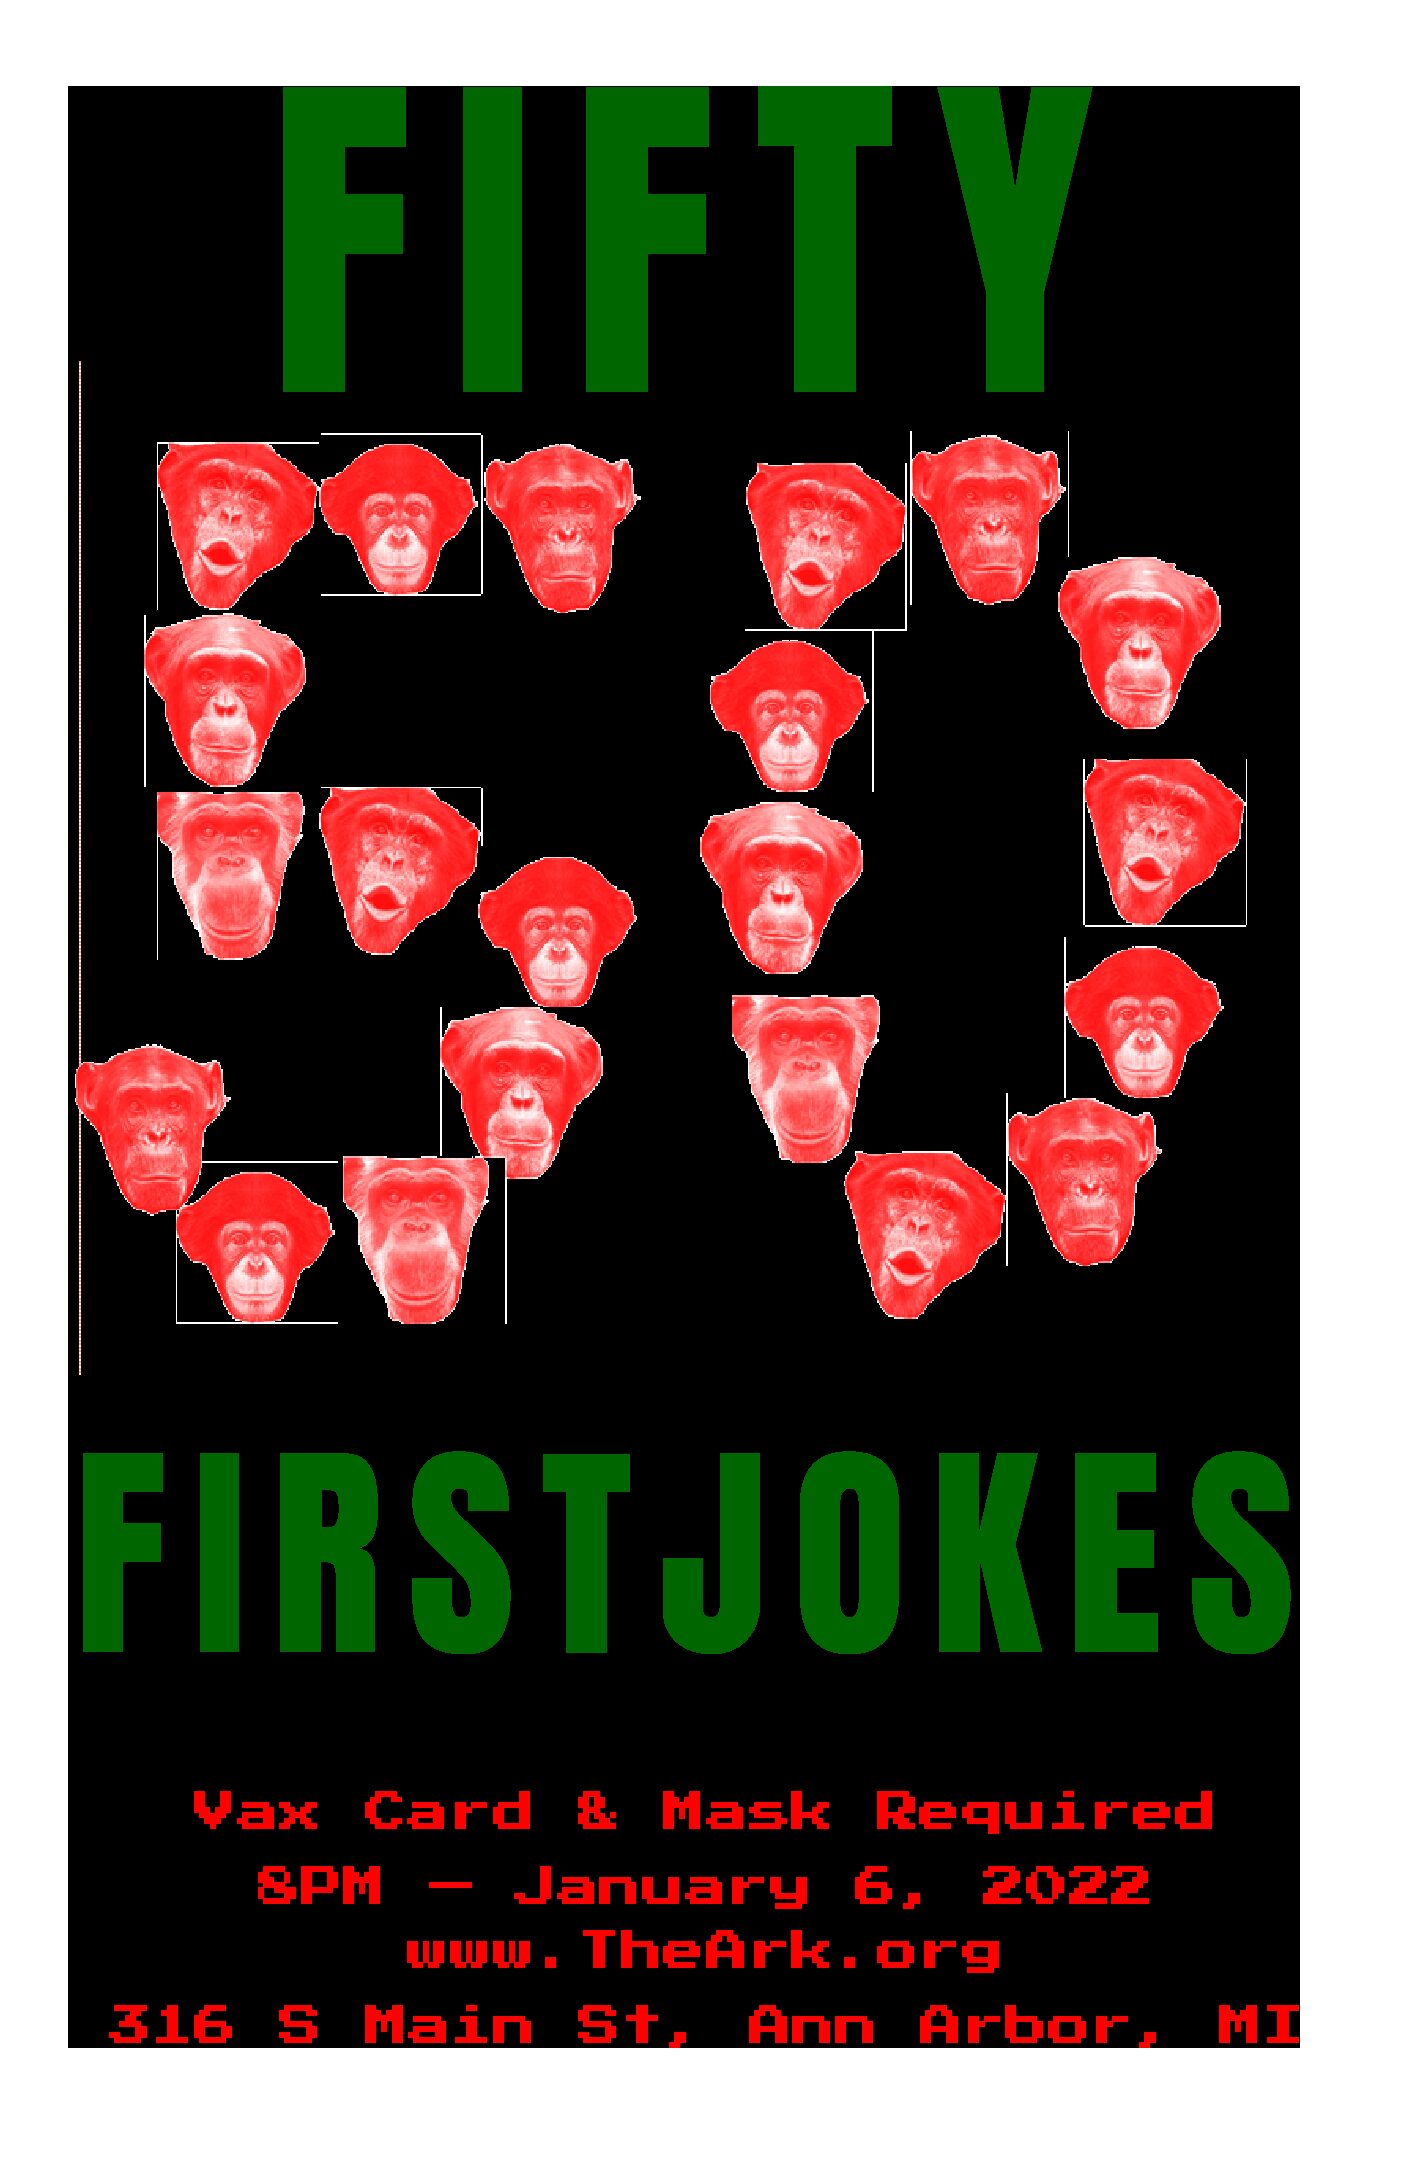 50 First Jokes